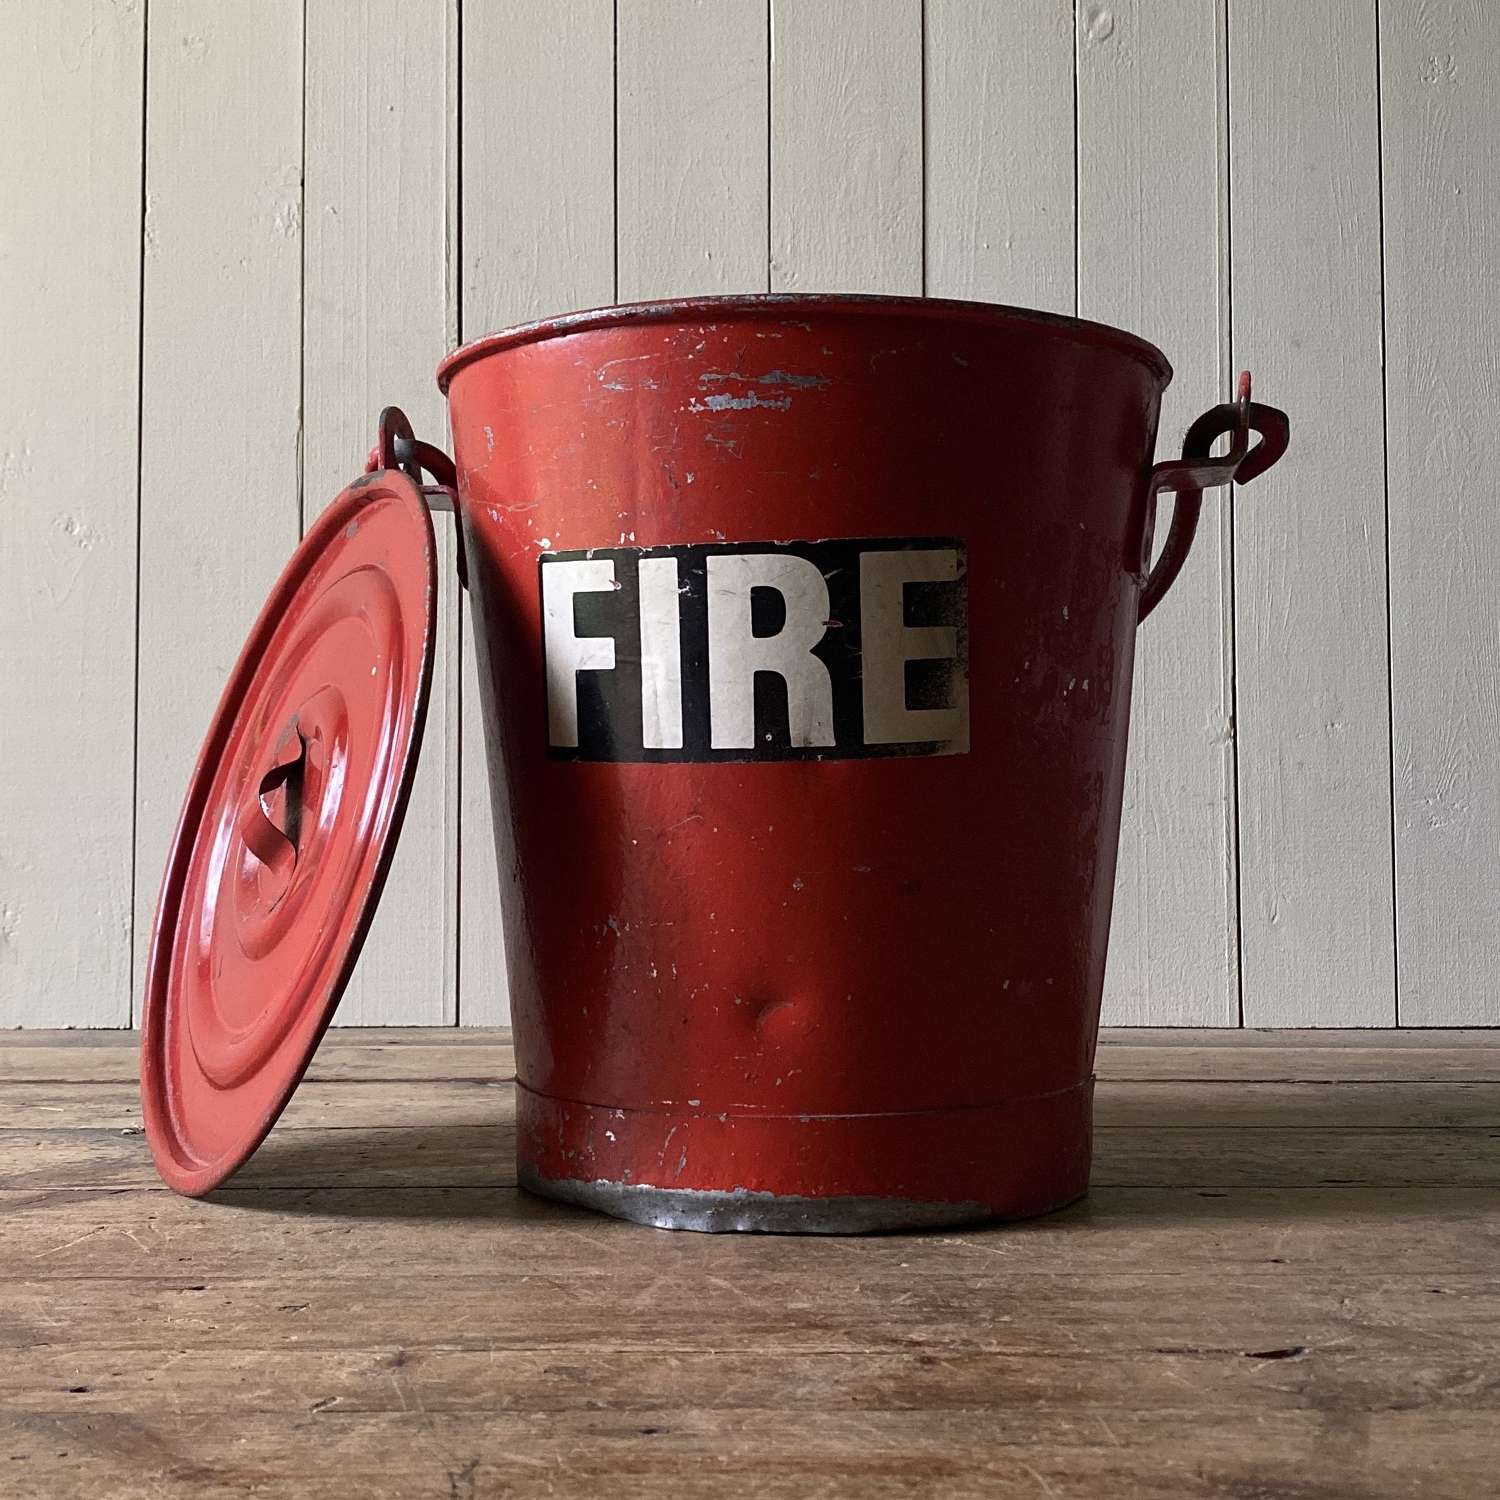 Vintage Fire Bucket